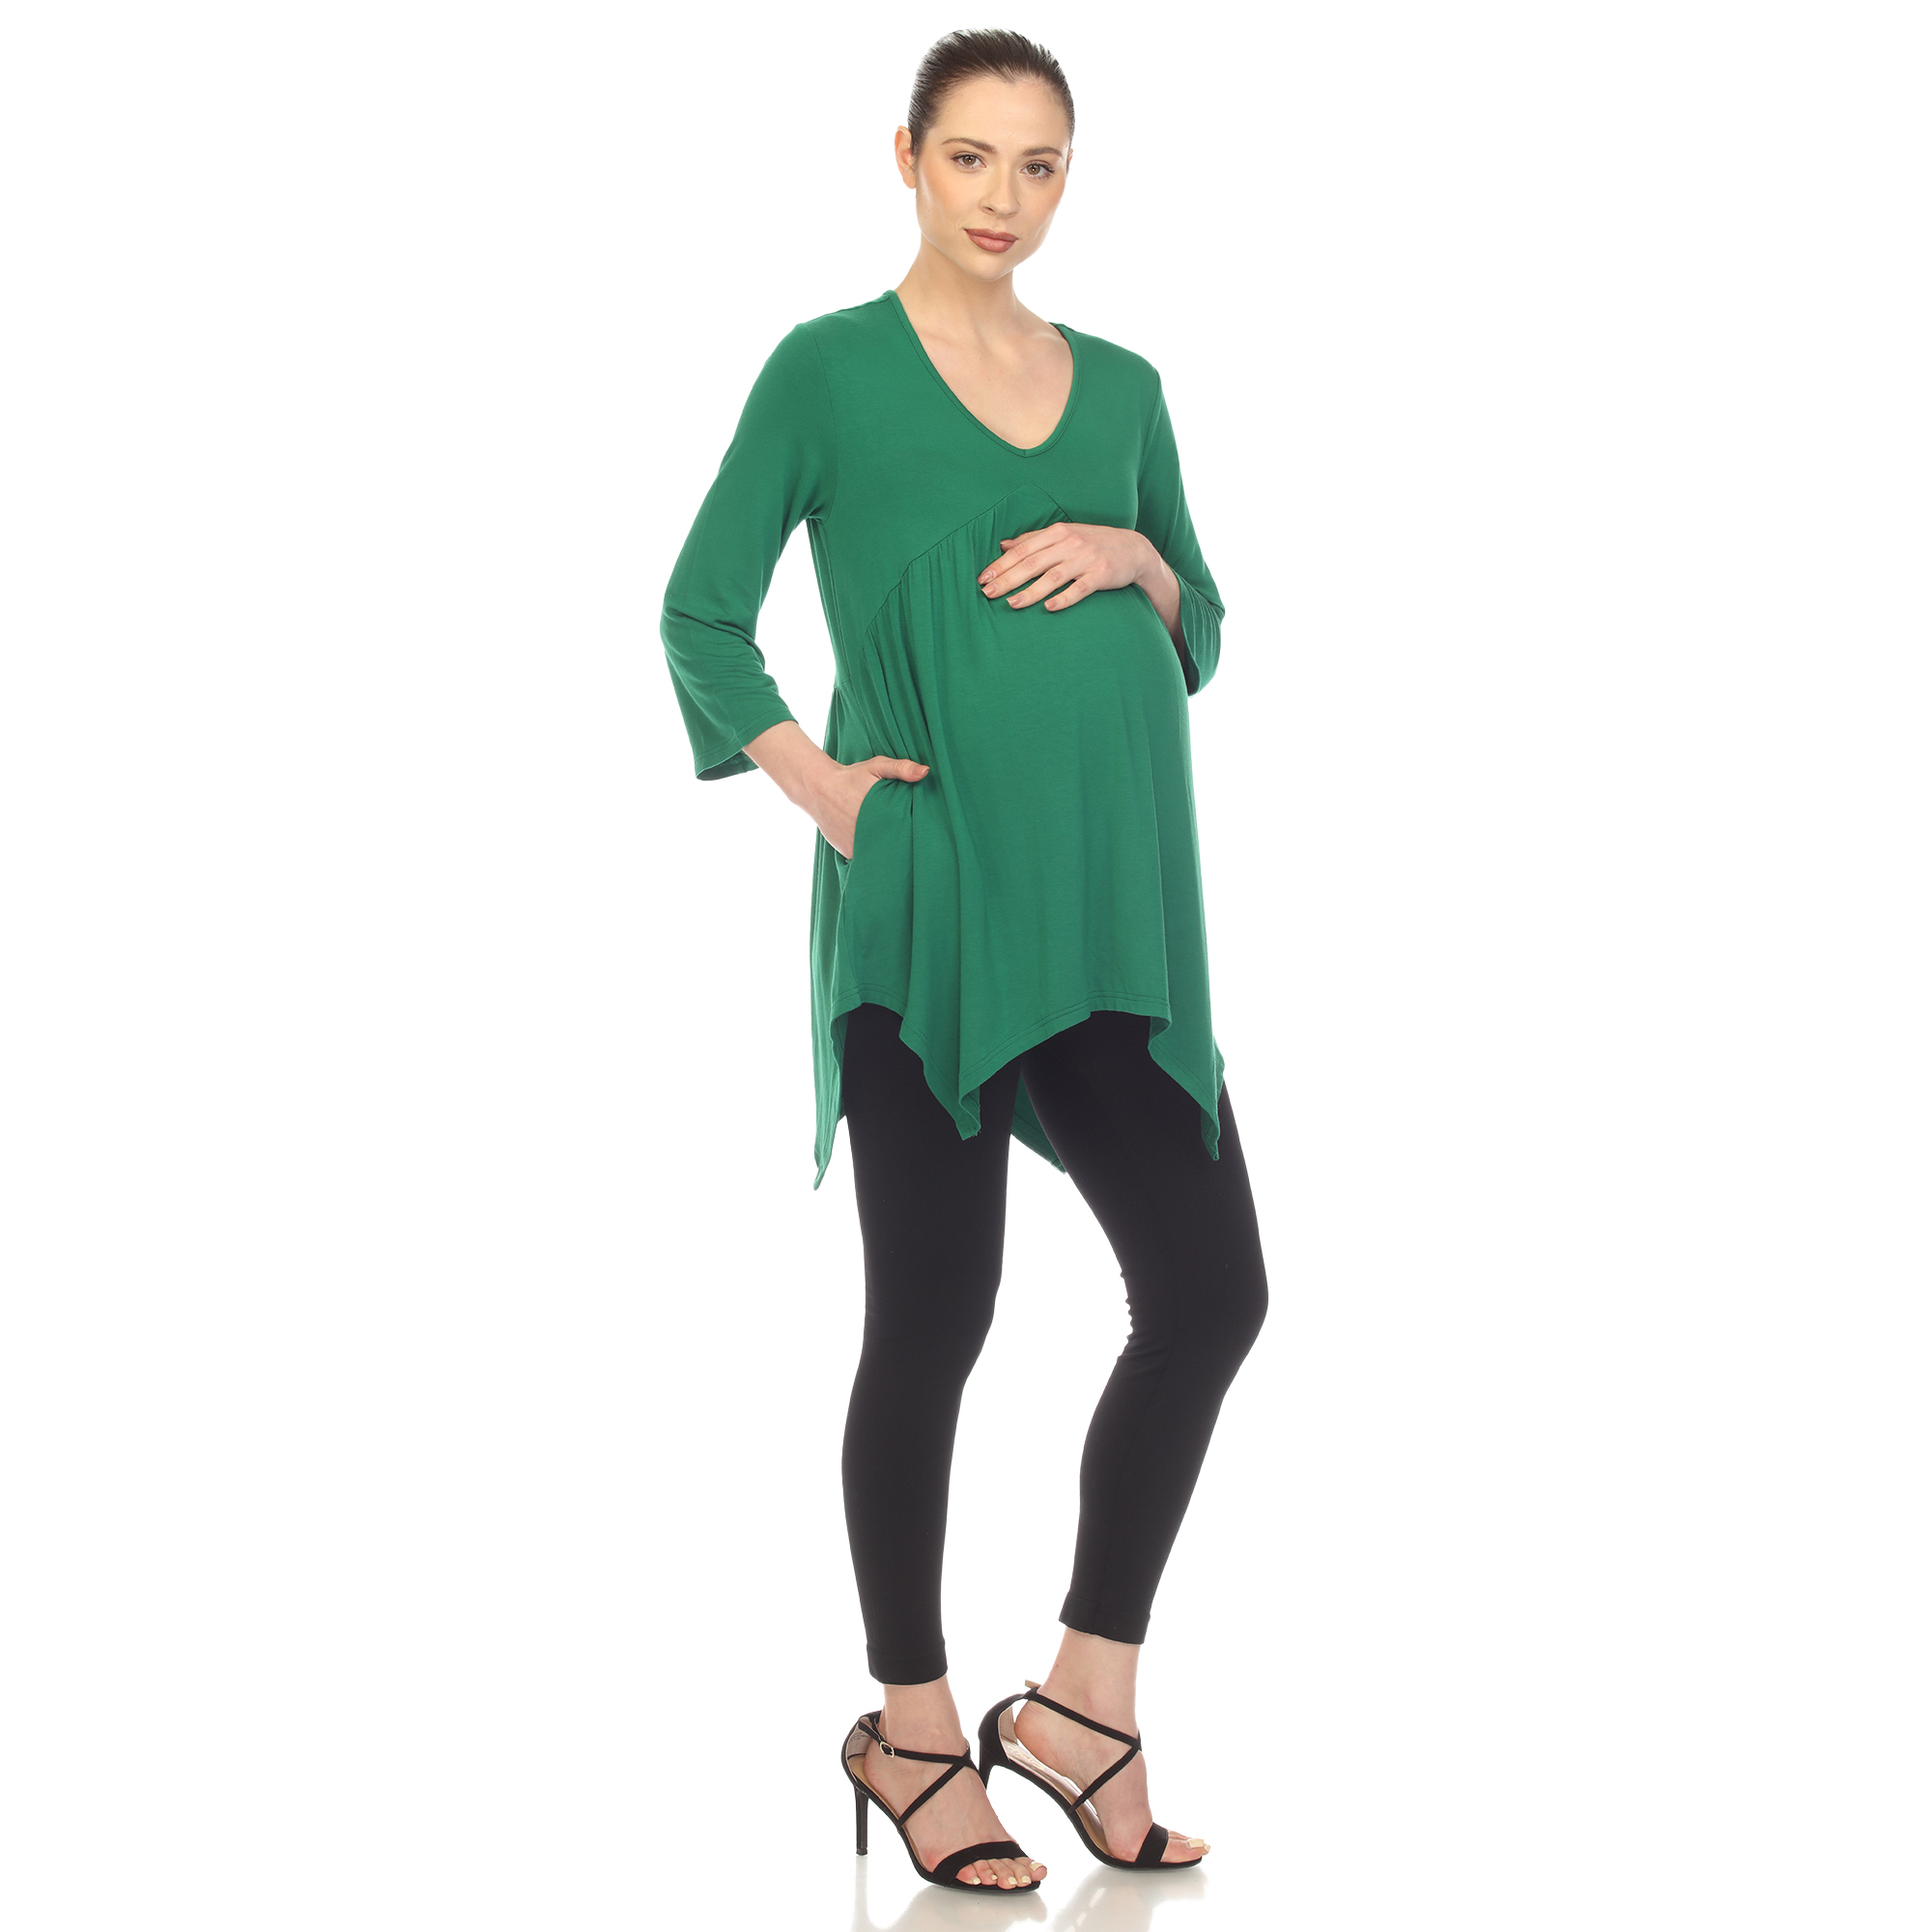 White Mark Women's Maternity Empire Waist V-Neck Tunic Top - Green, Medium